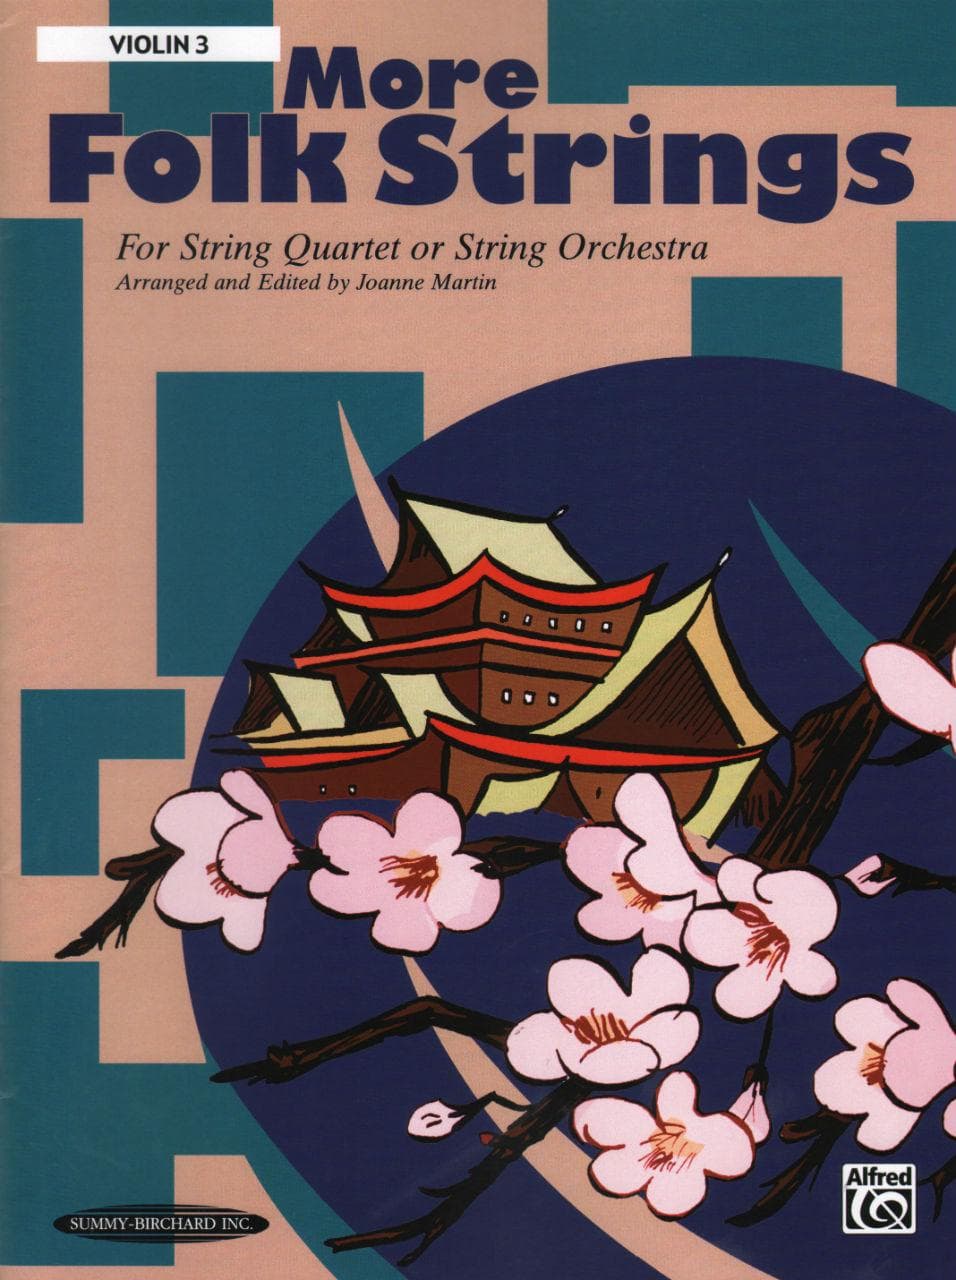 Martin, Joanne - More Folk Strings for String Quartet or String Orchestra - Violin 3 part - Alfred Music Publishing